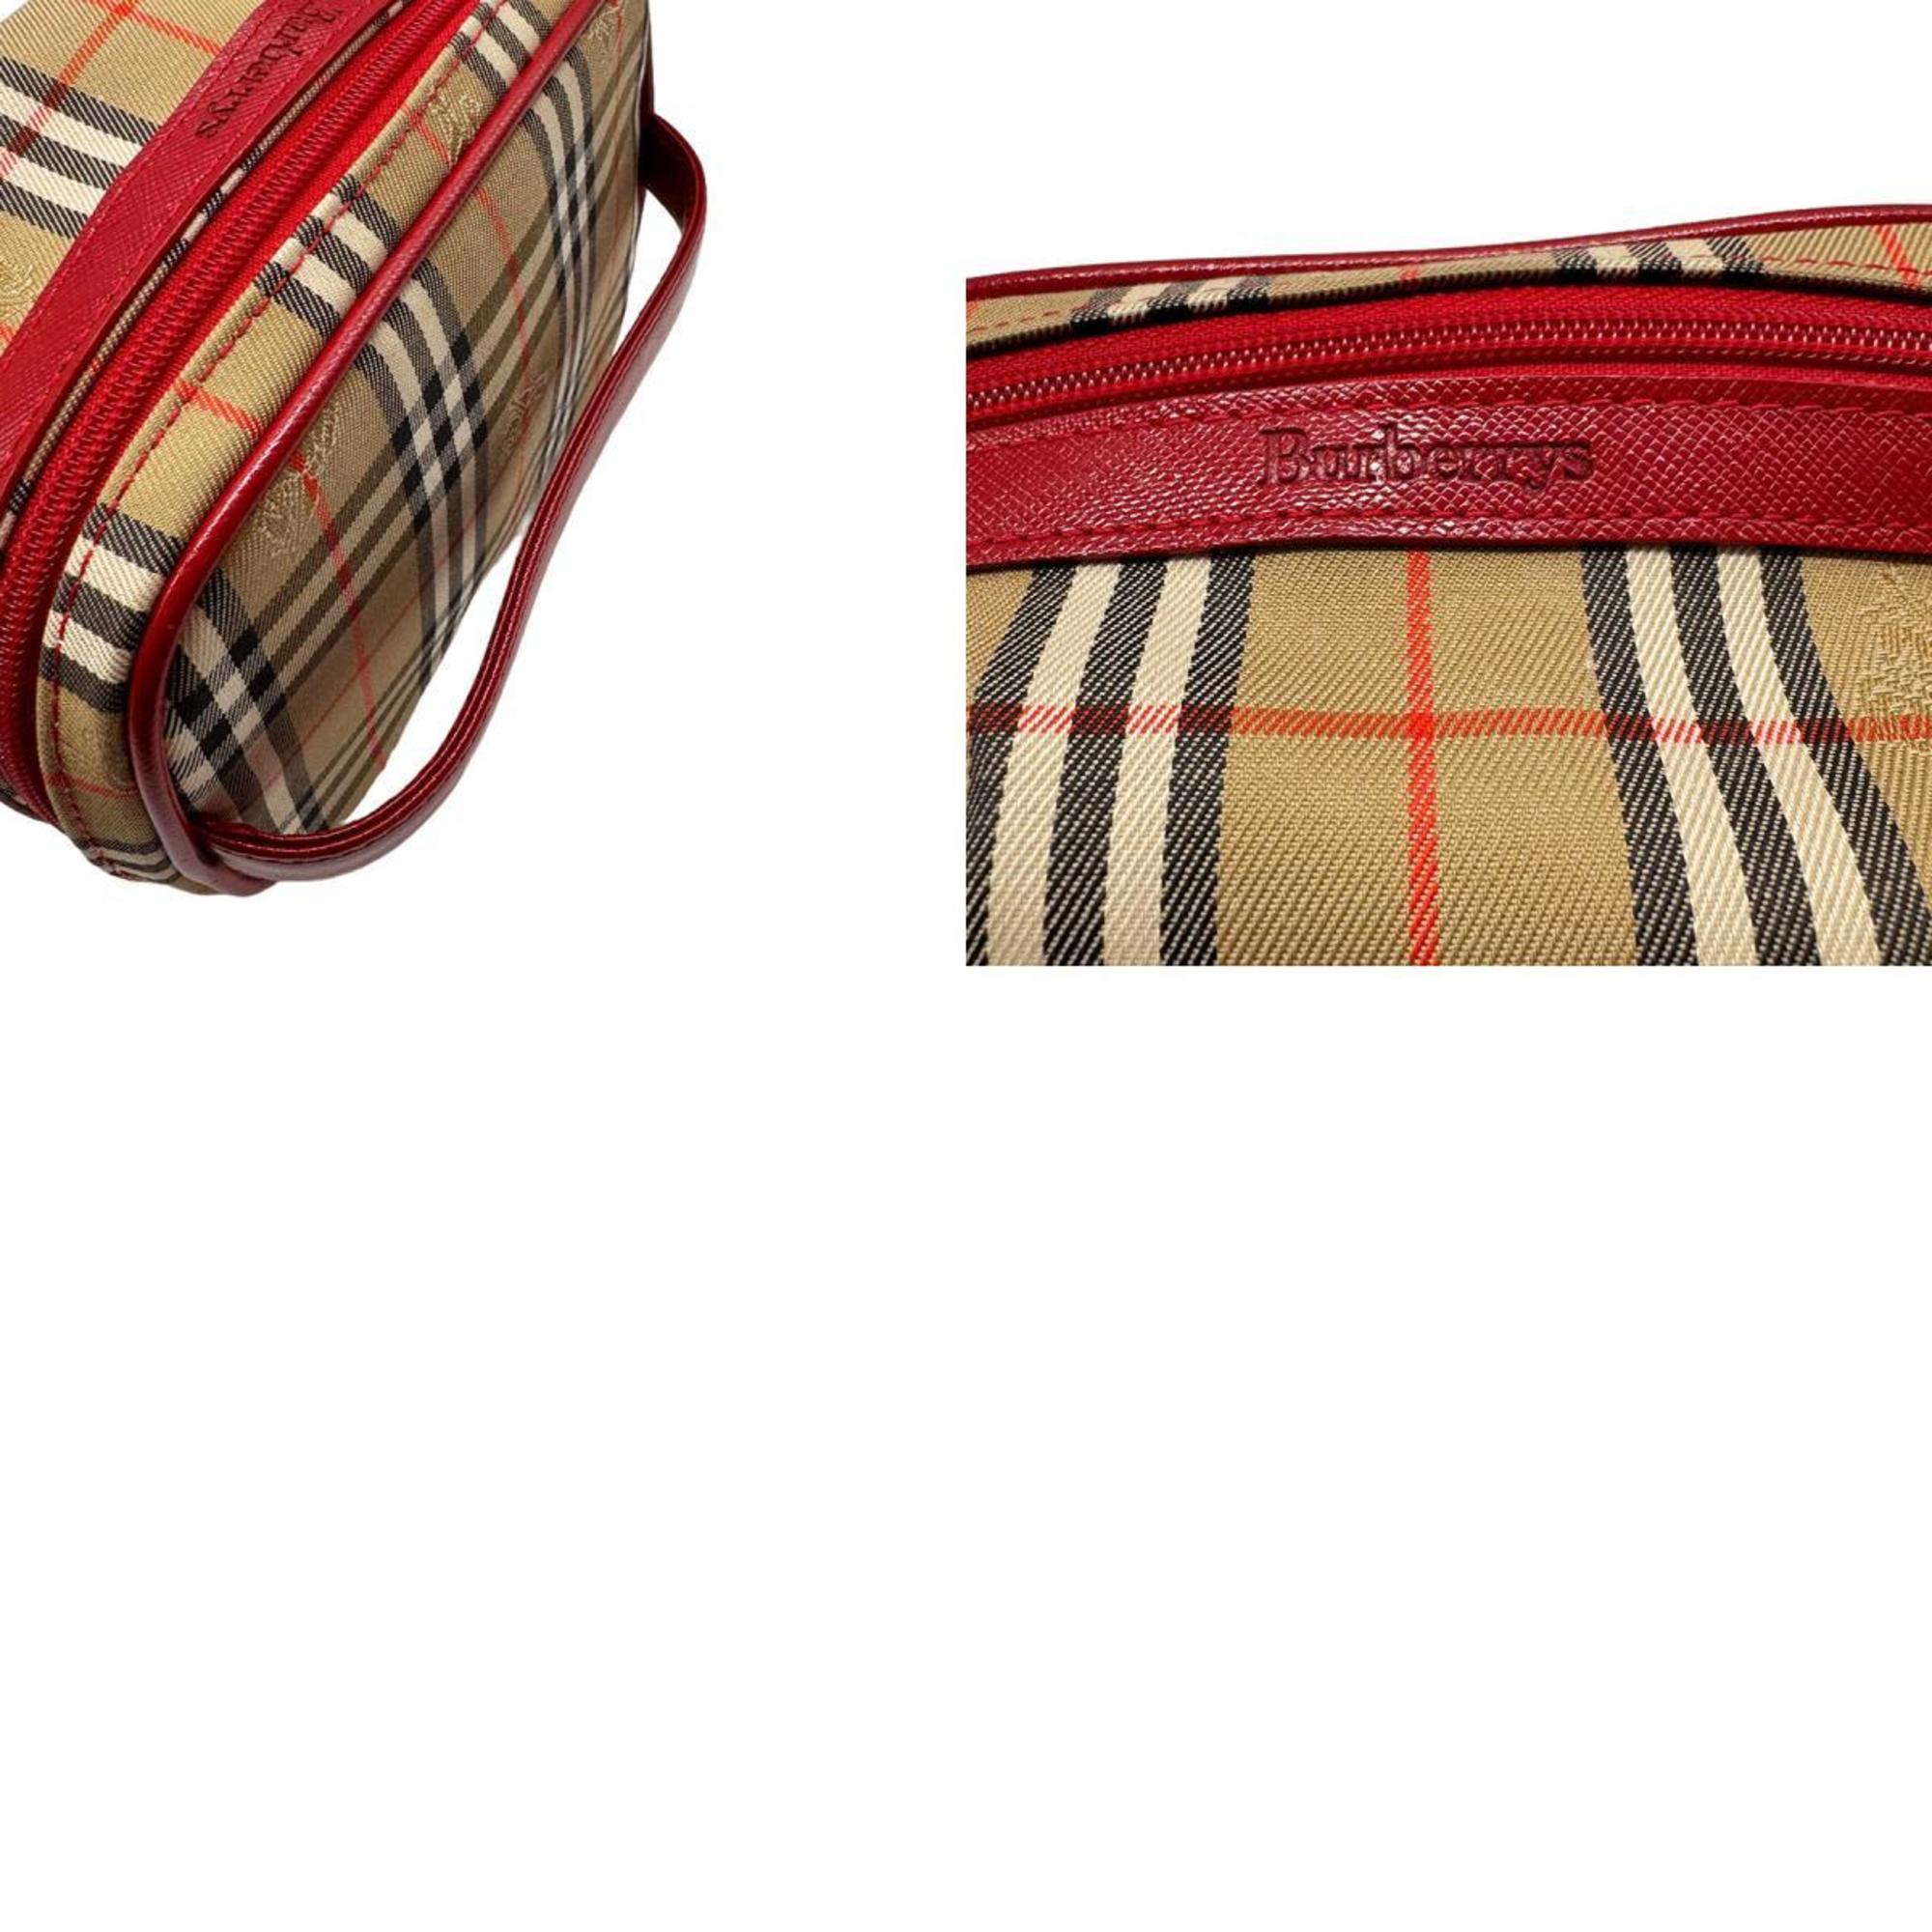 Burberrys Handbag Vanity Bag Pouch Leather/Canvas Red x Beige Women's z0467